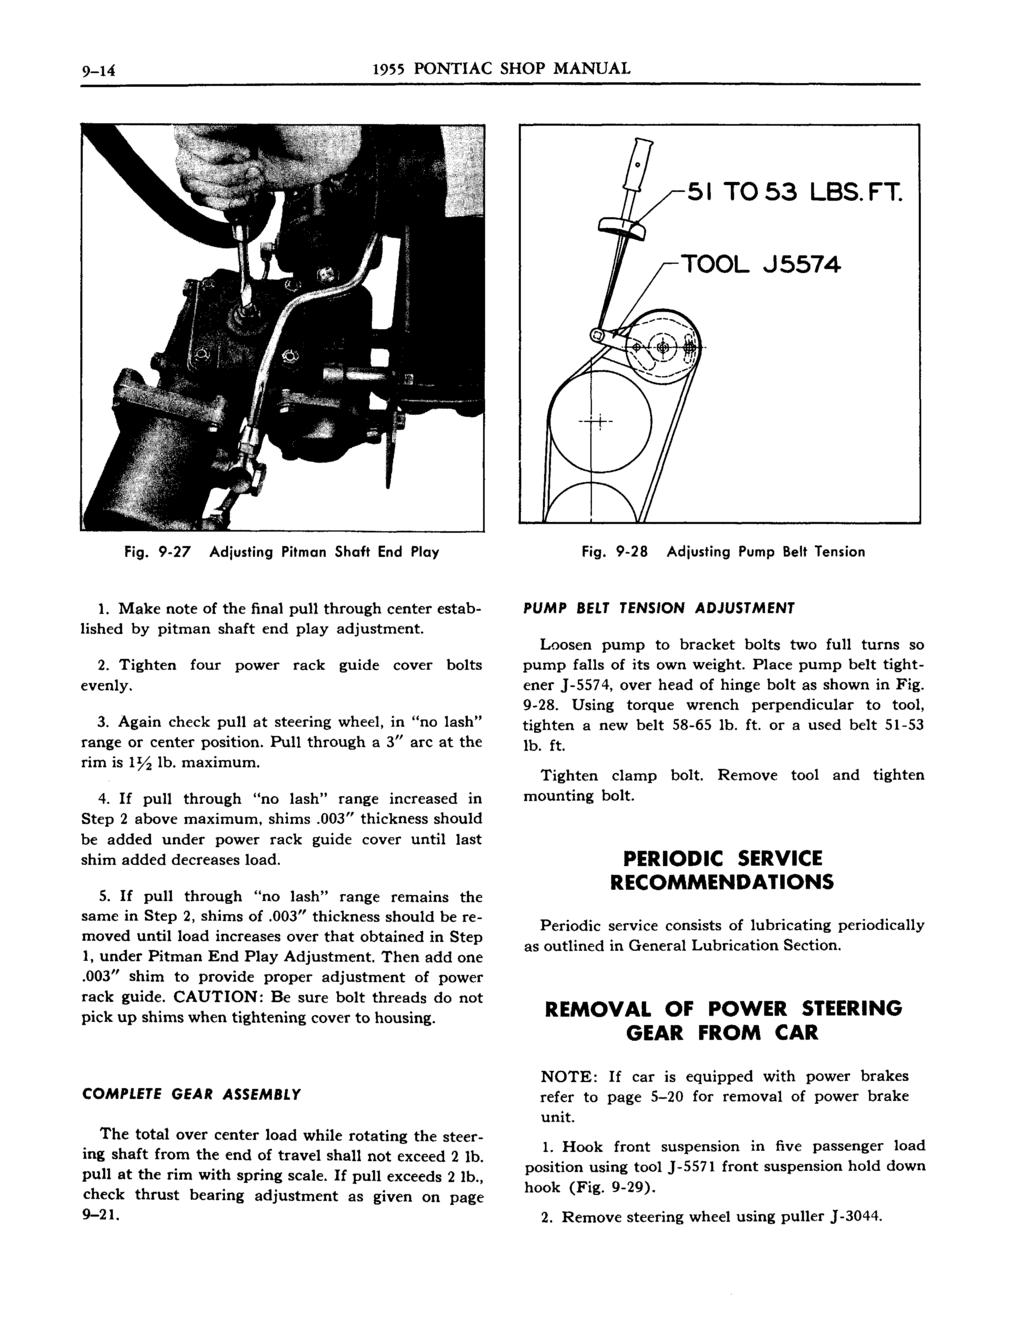 9-14 1955 PONTIAC SHOP MANUAL 51 TO 53 LBS. FT. TOOL J5574 Fig. 9-27 Adjusting Pitman Shaft End Play Fig. 9-28 Adjusting Pump Belt Tension 1.